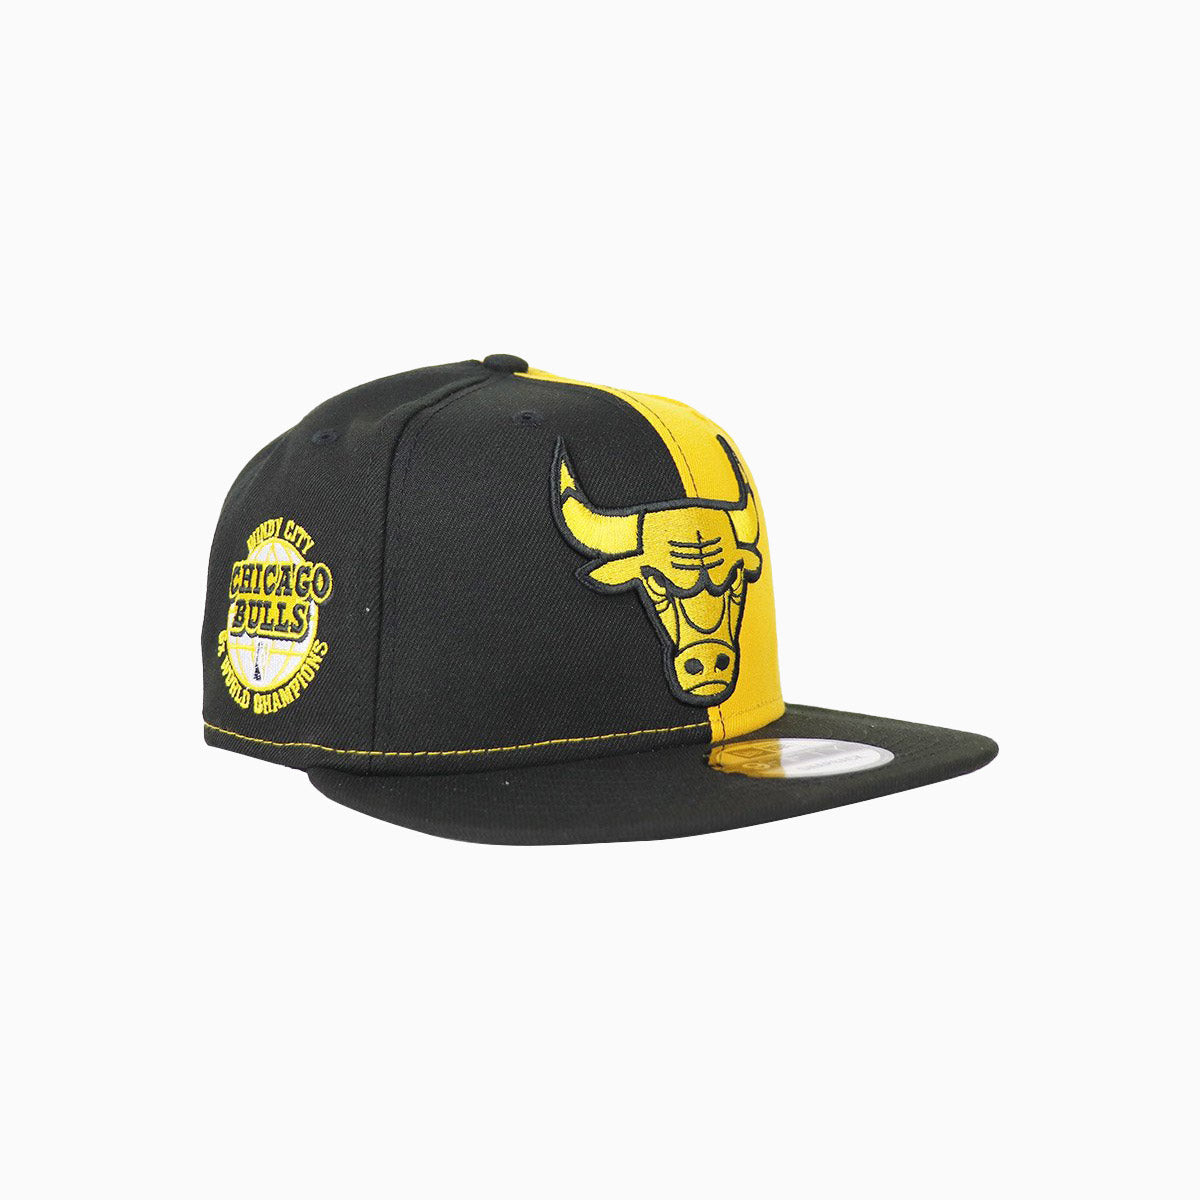 New Era Chicago Bulls NBA Black & Yellow 9FIFTY Snapback Hat in Black/Yellow/Yellow